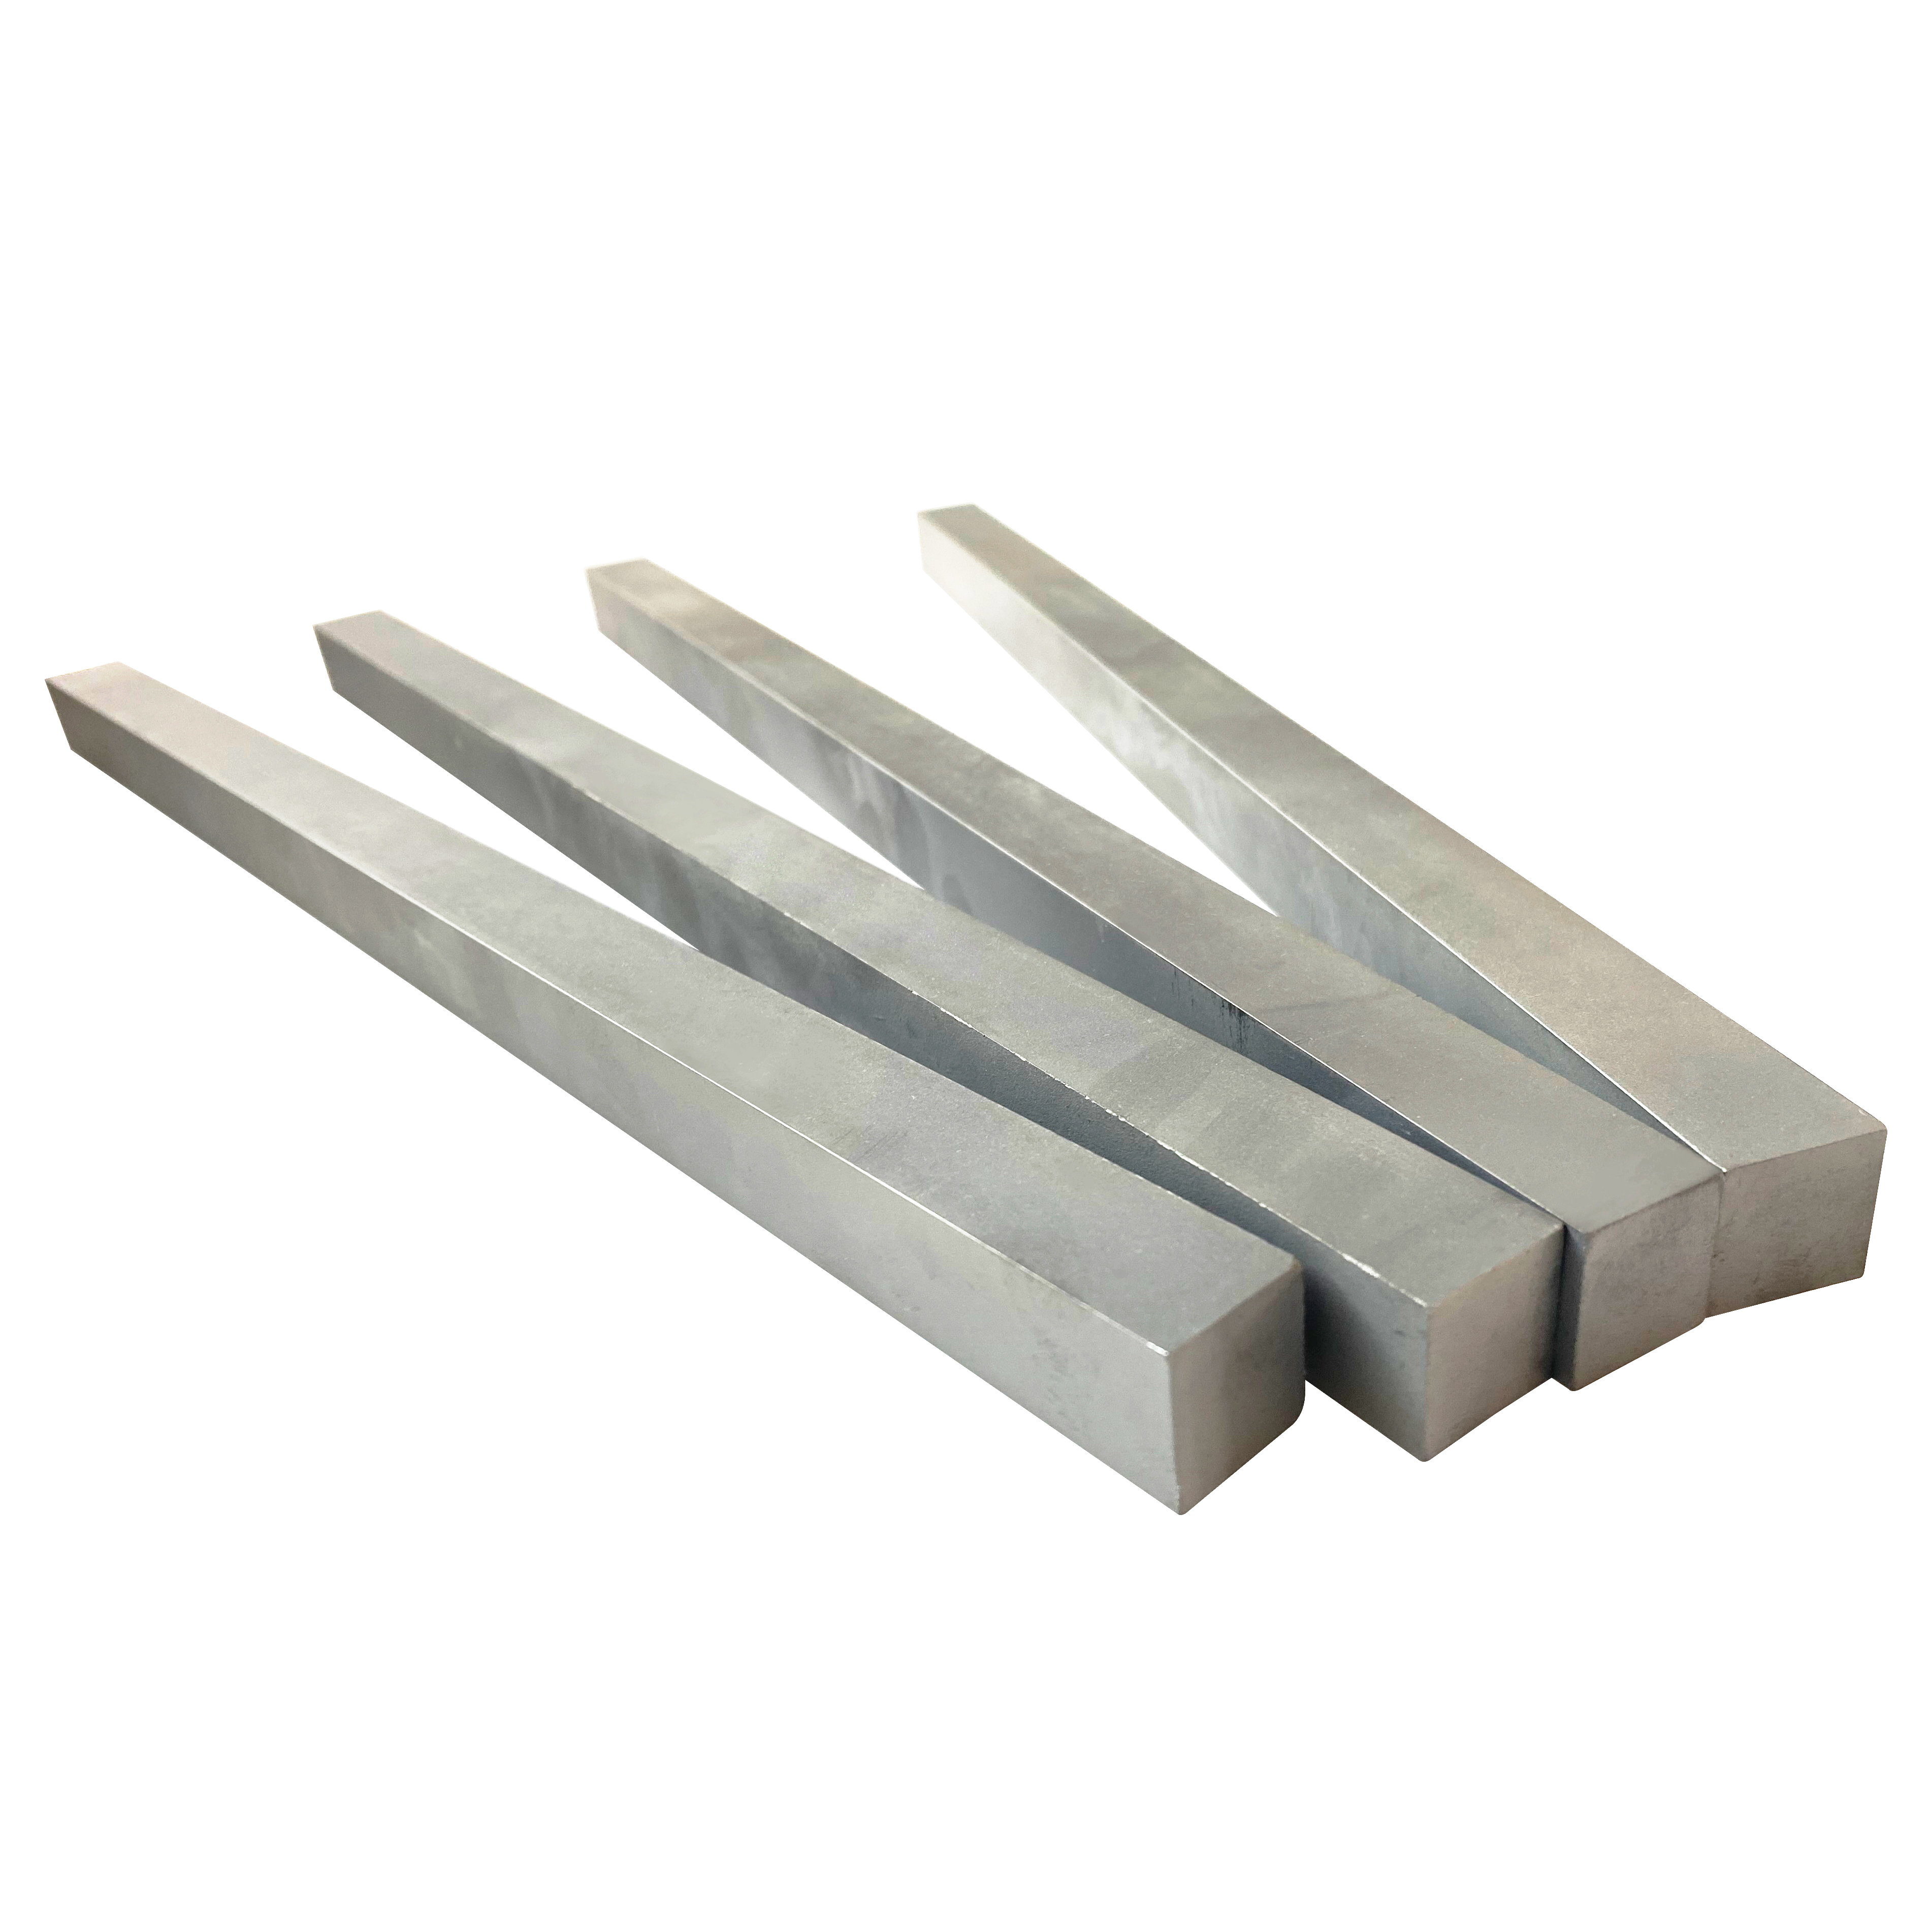 Cemented carbide strips